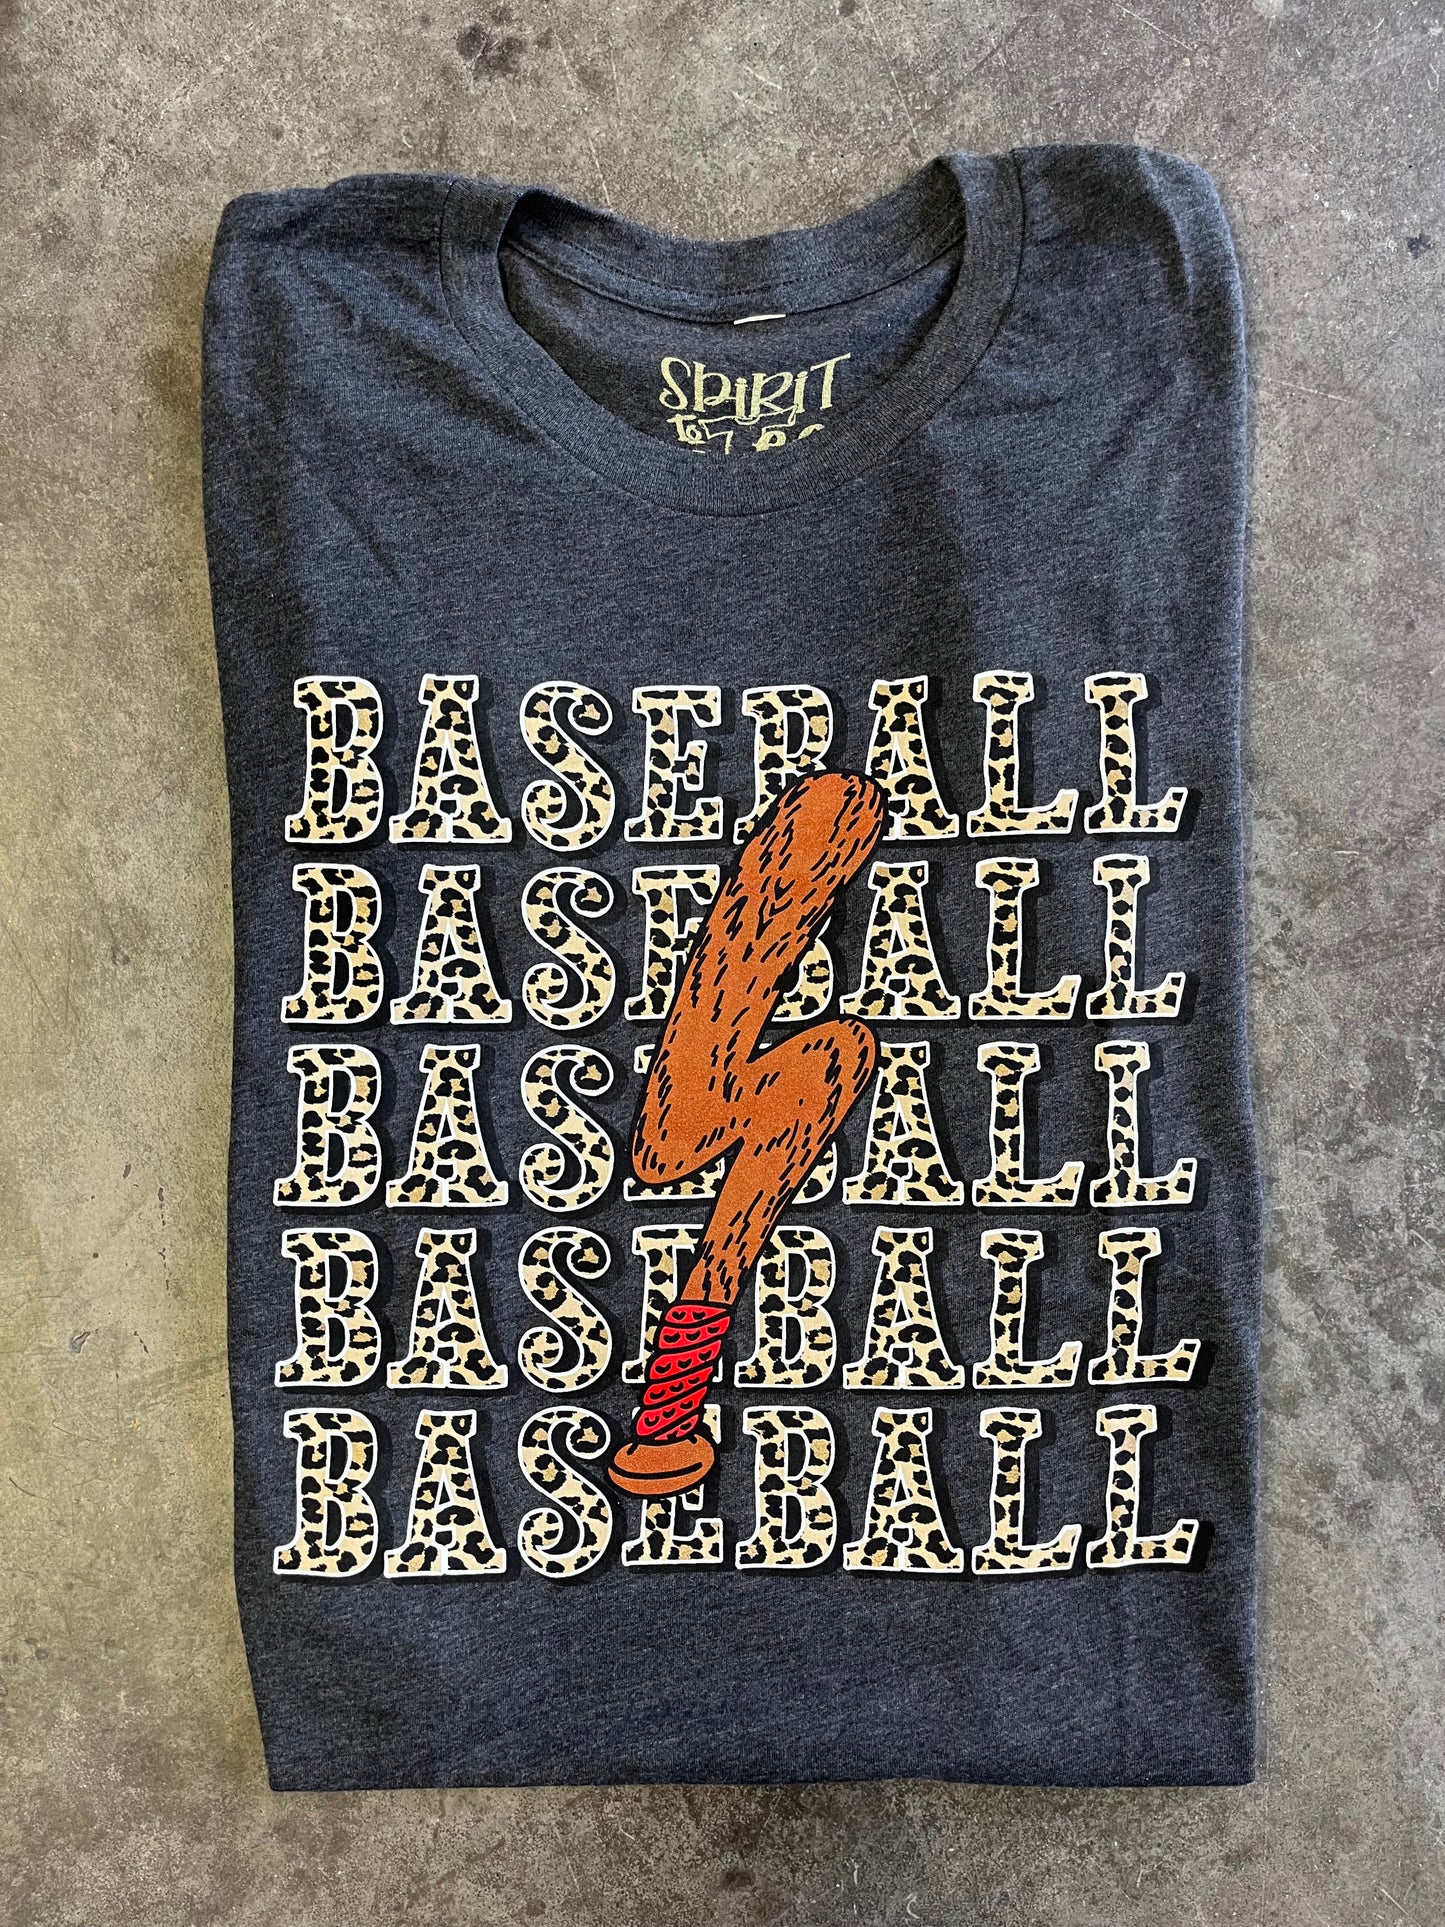 Lightning Bolt “Baseball…” Tee